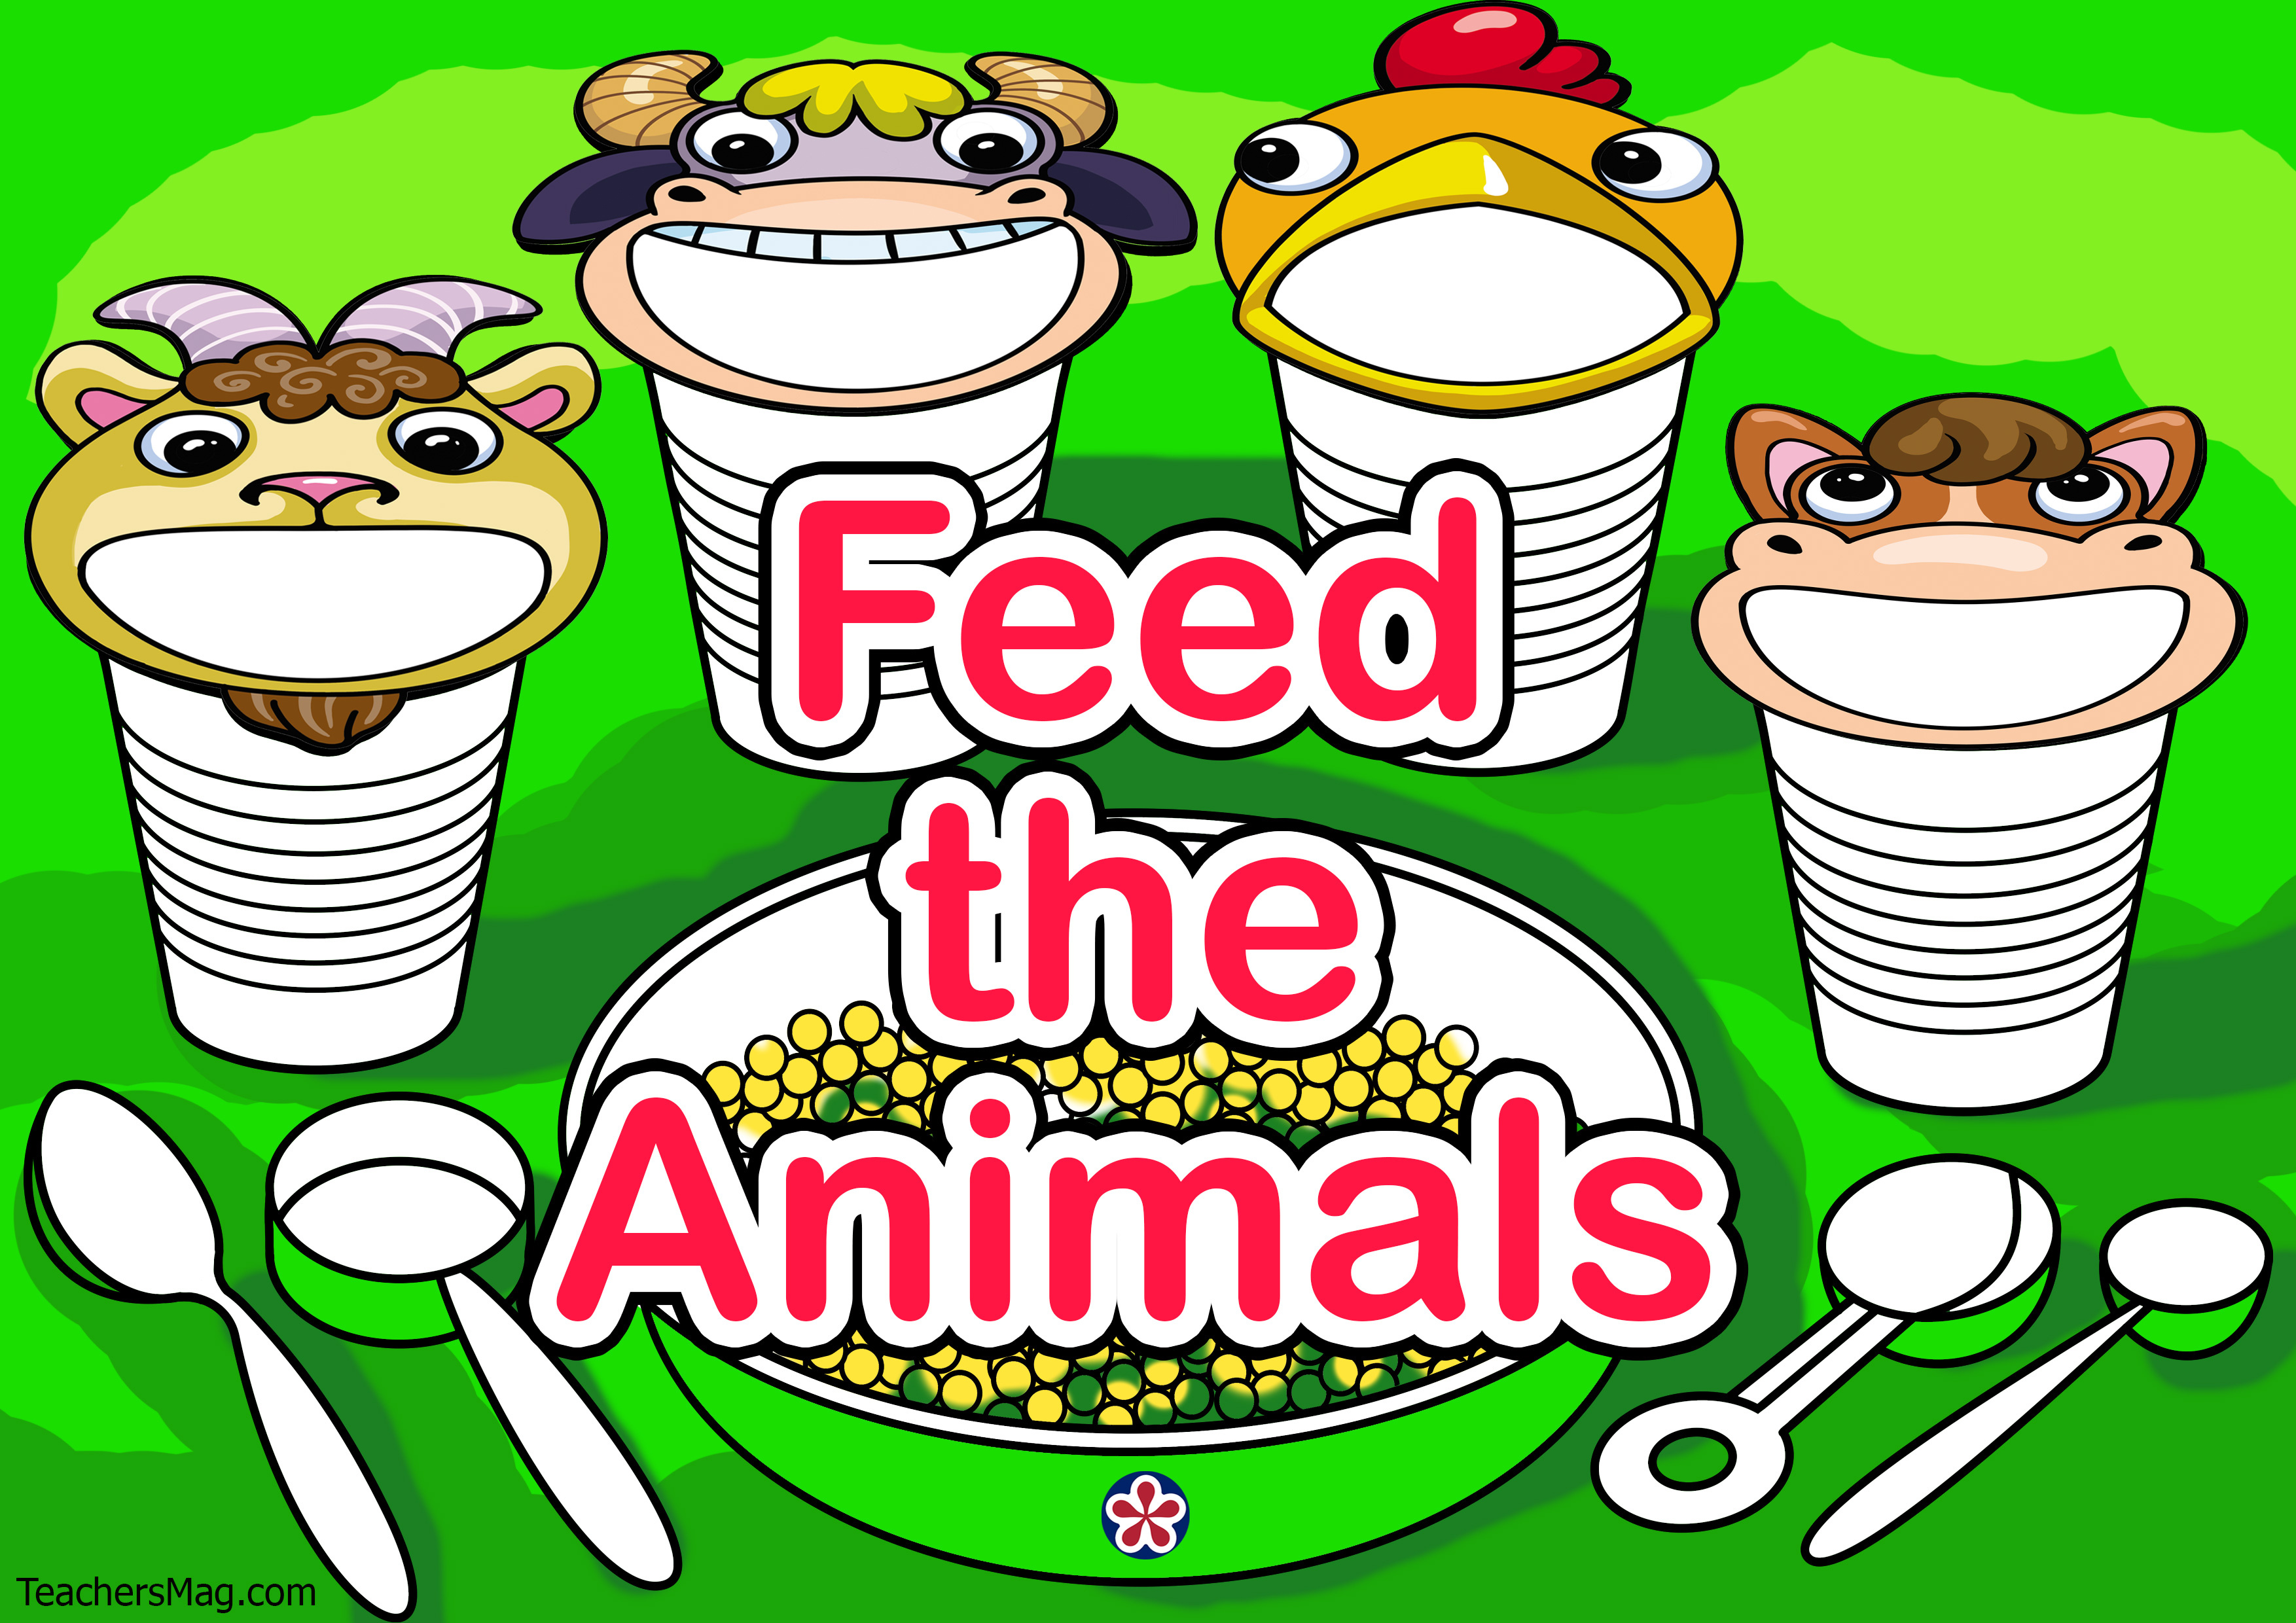 feed-the-animals-printable-activity-teachersmag